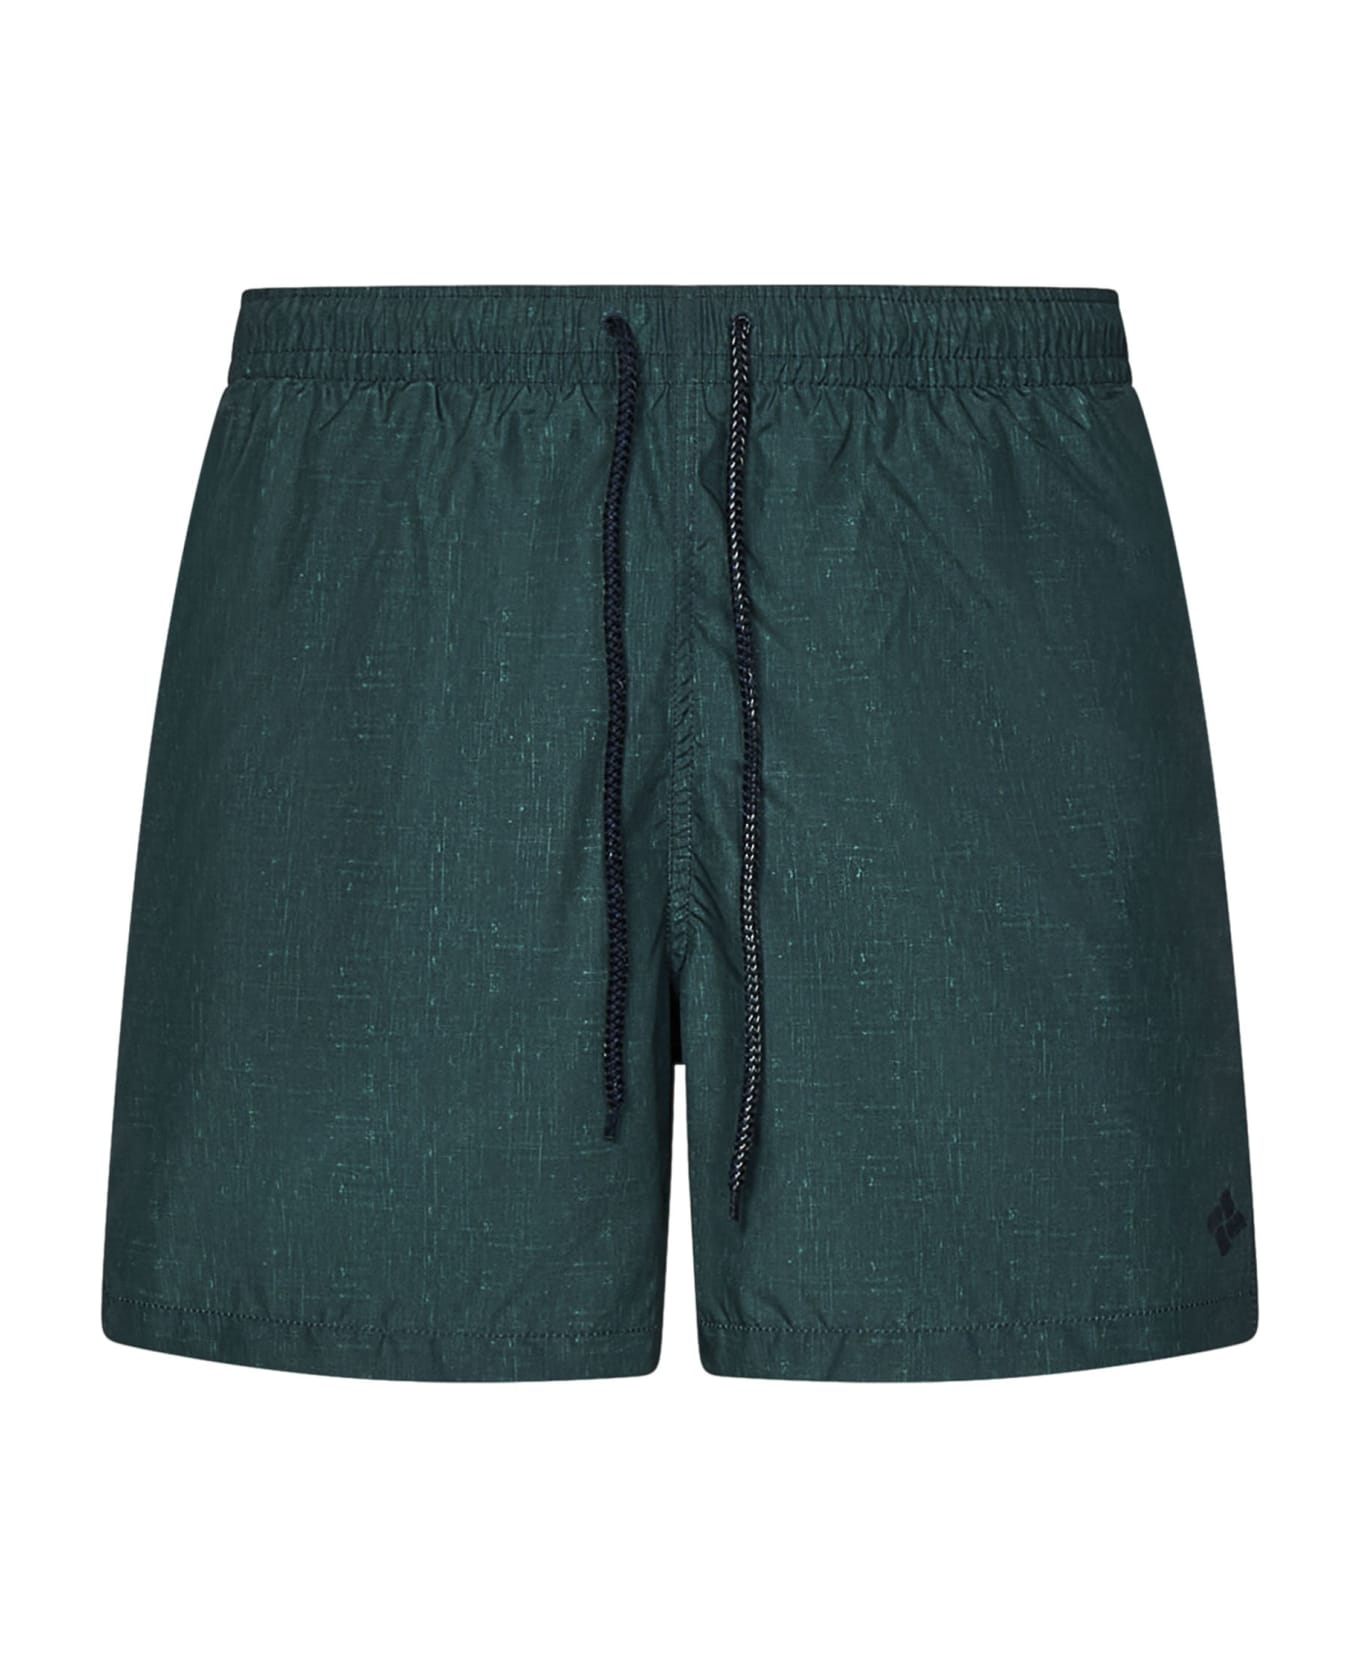 Drumohr Swimsuit - Green